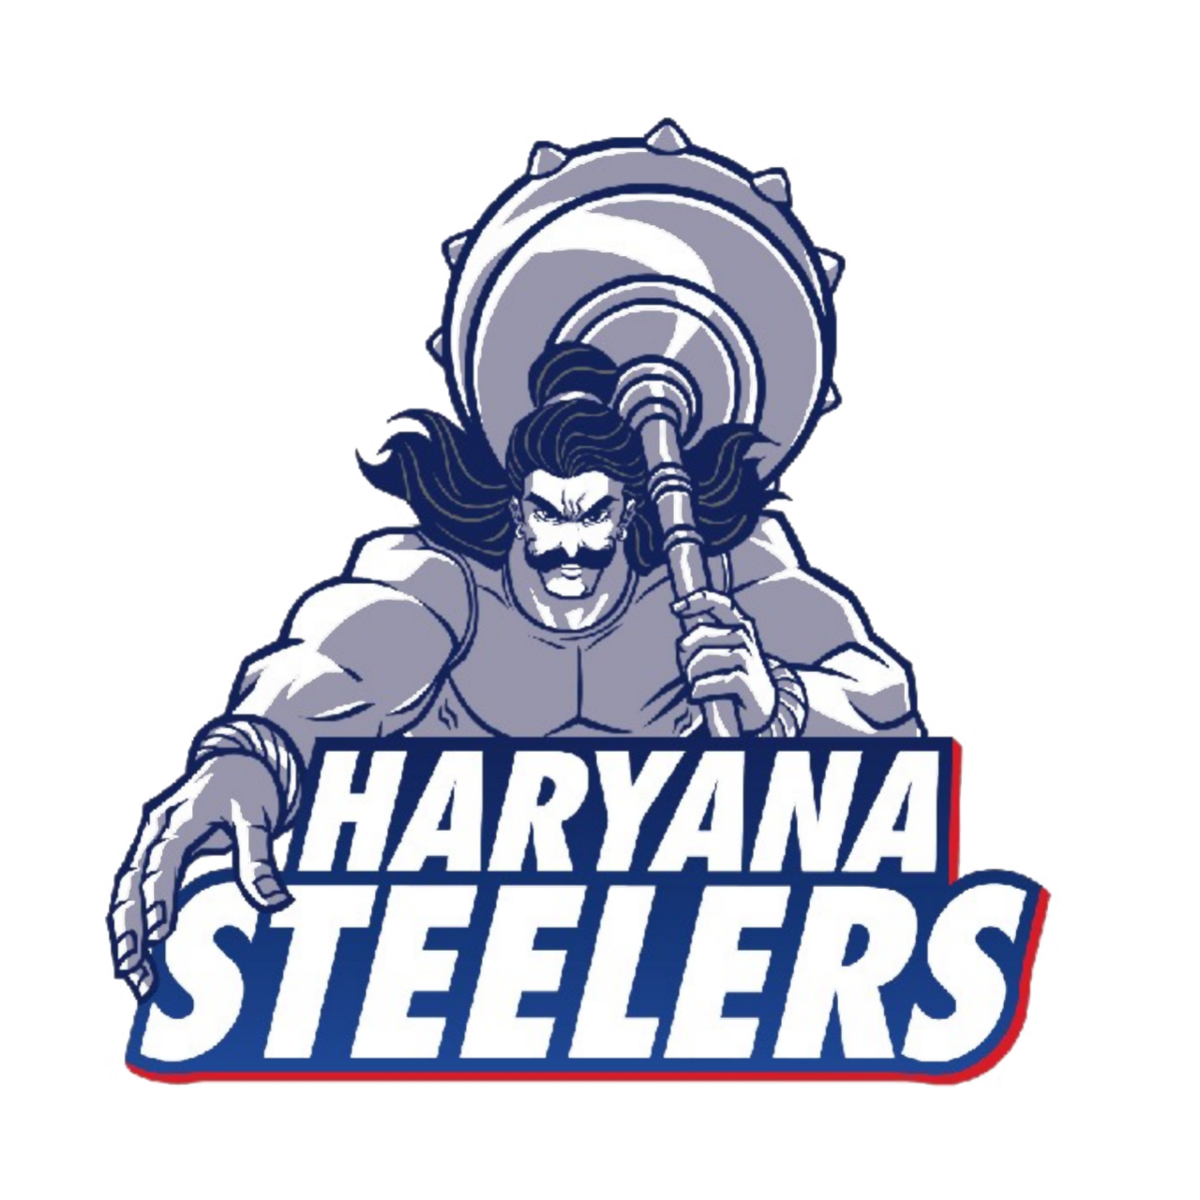 PKL – Haryana Steelers (HAR) logo colors